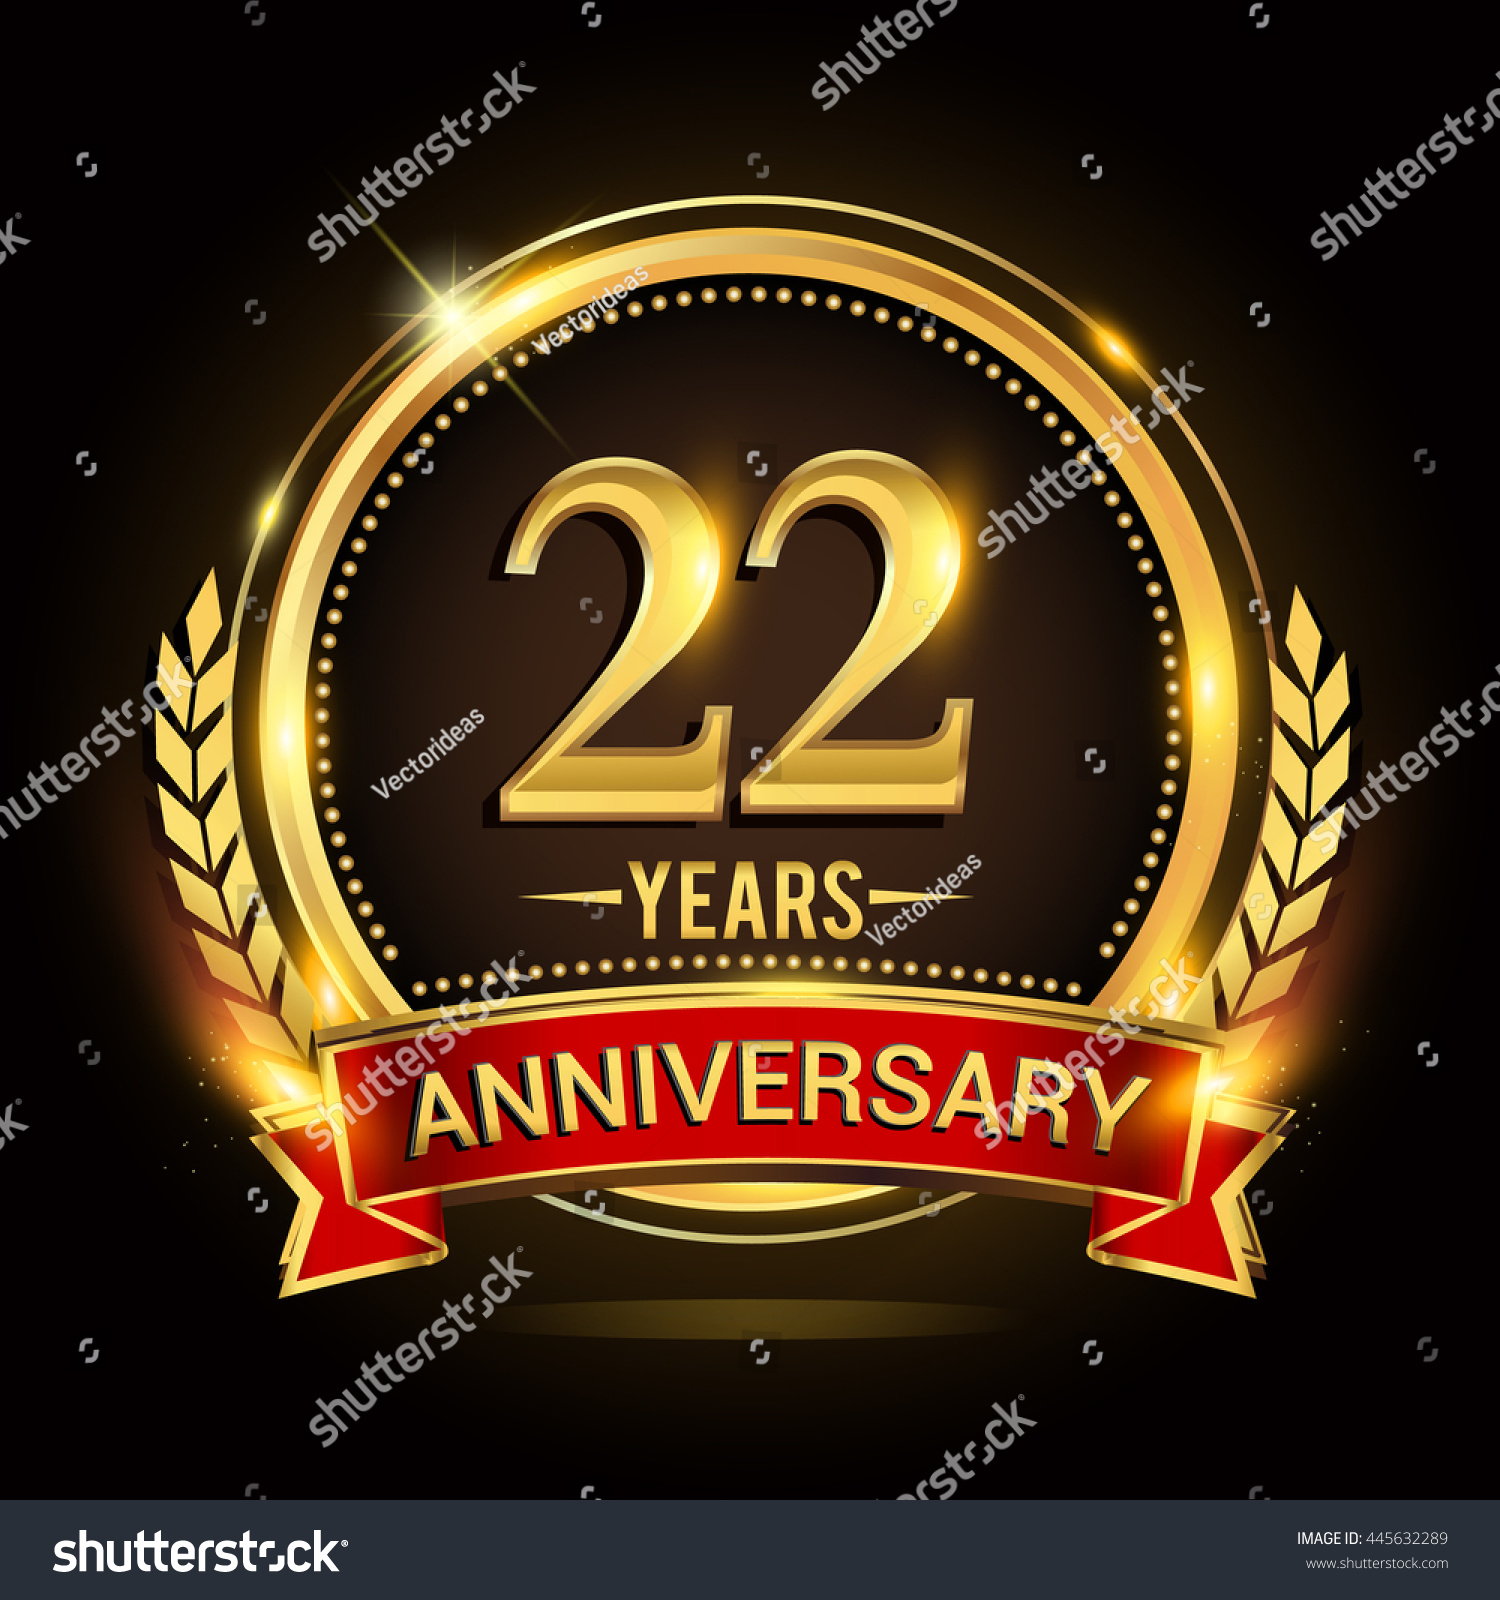 celebrating-22-years-anniversary-logo-golden-stock-vector-445632289